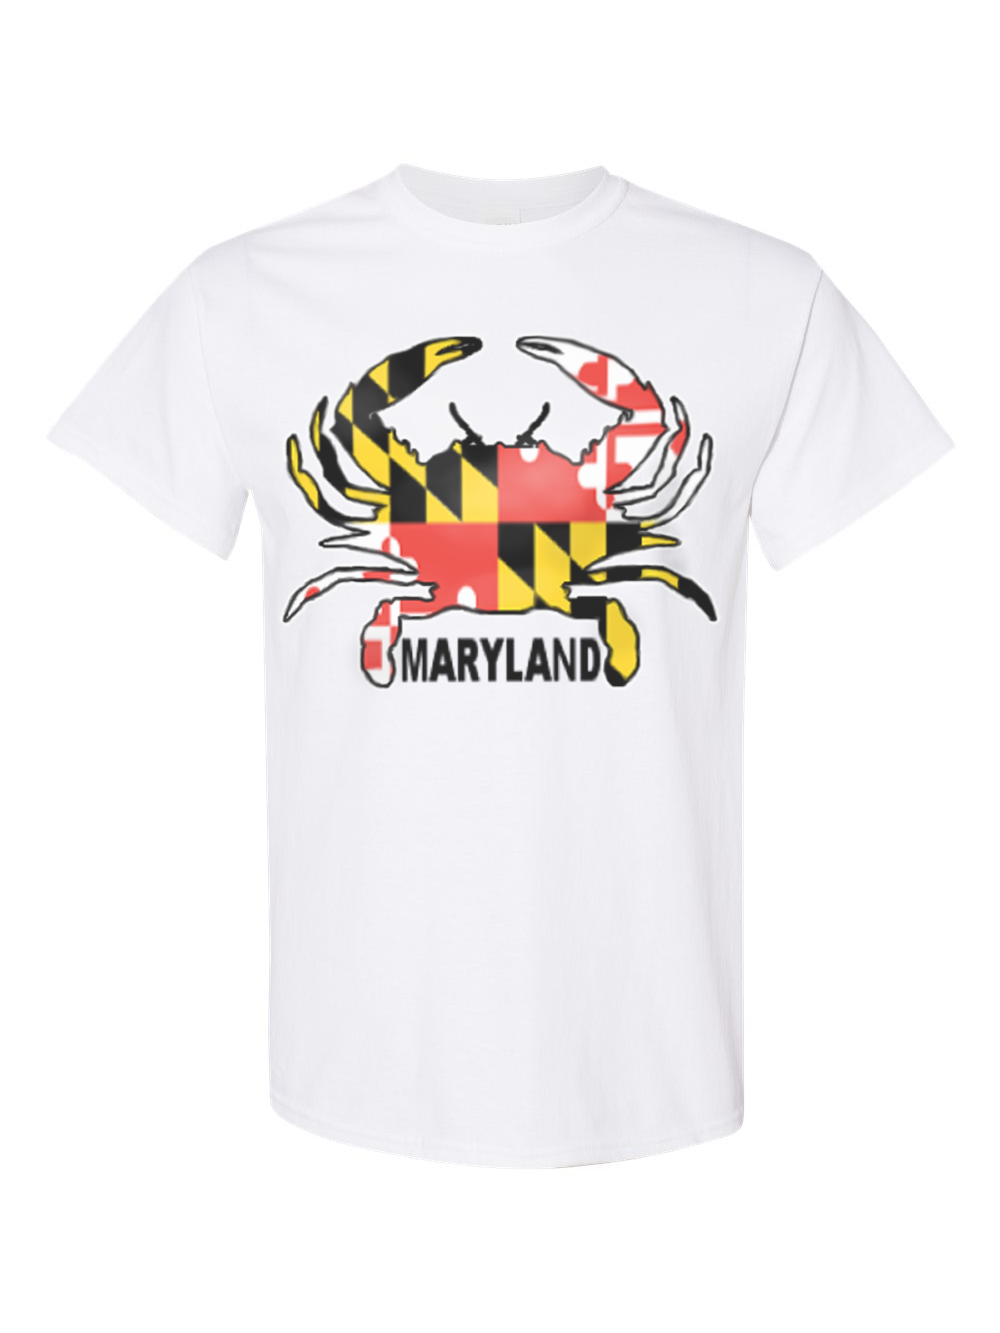 Shop Maryland Crab T-Shirts and more - Maryland-Gifts.com